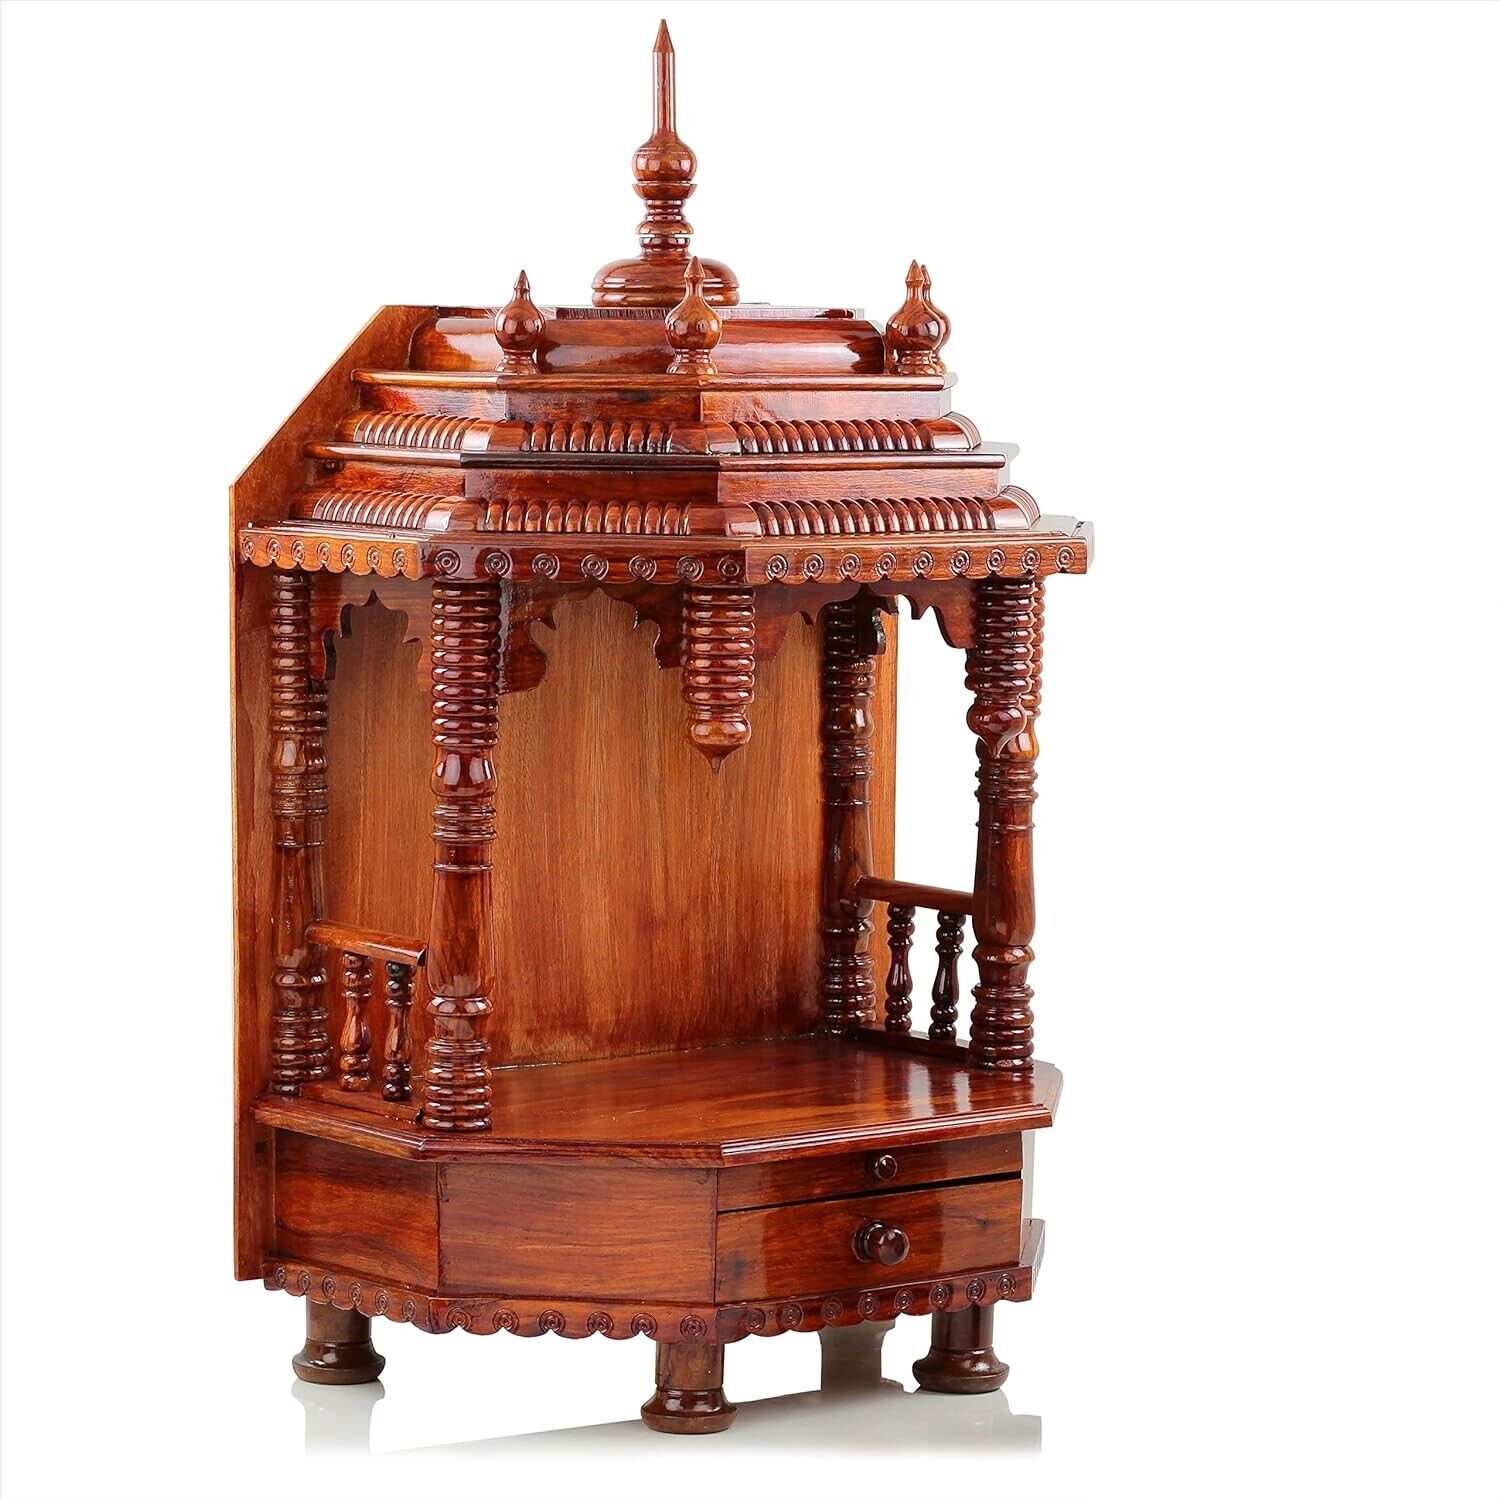 Premium Hand Made Large Rosewood Wooden Symbolic God House Indian Mandir Temple